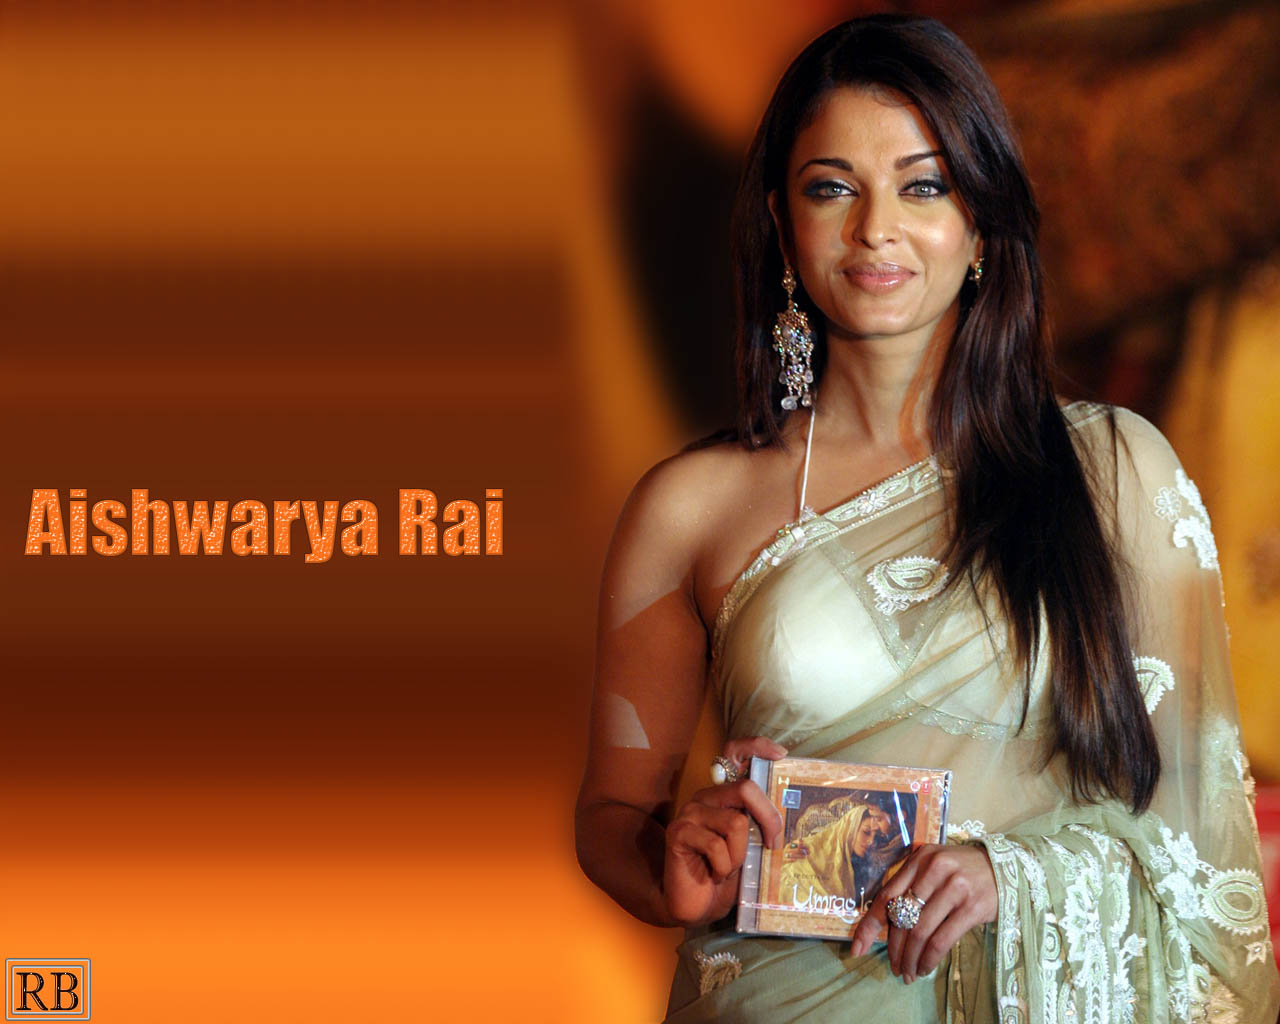 aishwarya rai ke wallpaper,abdomen,sari,kofferraum